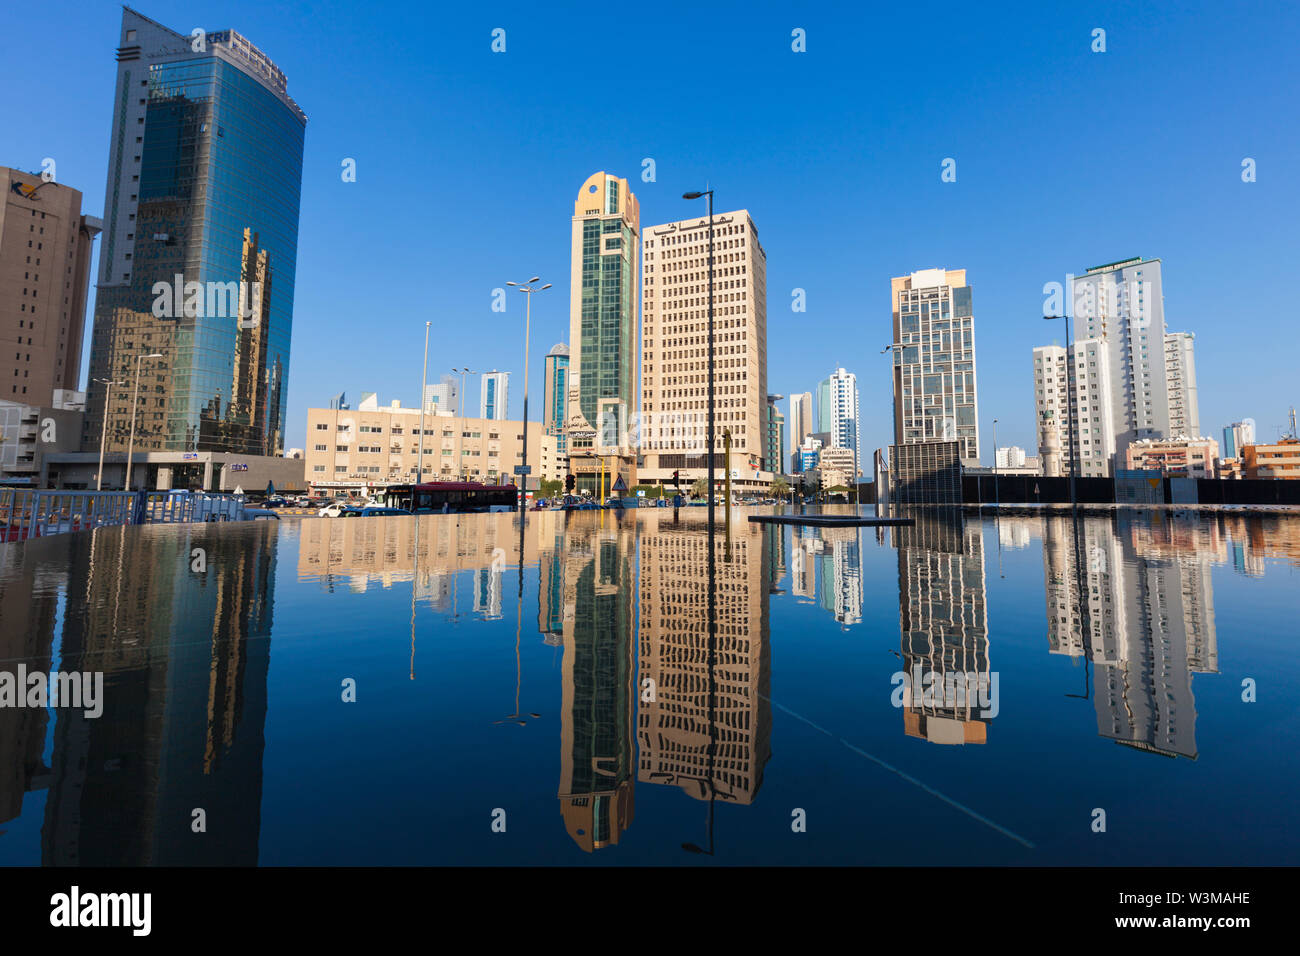 Skyscrapers in Kuwait Stock Photo